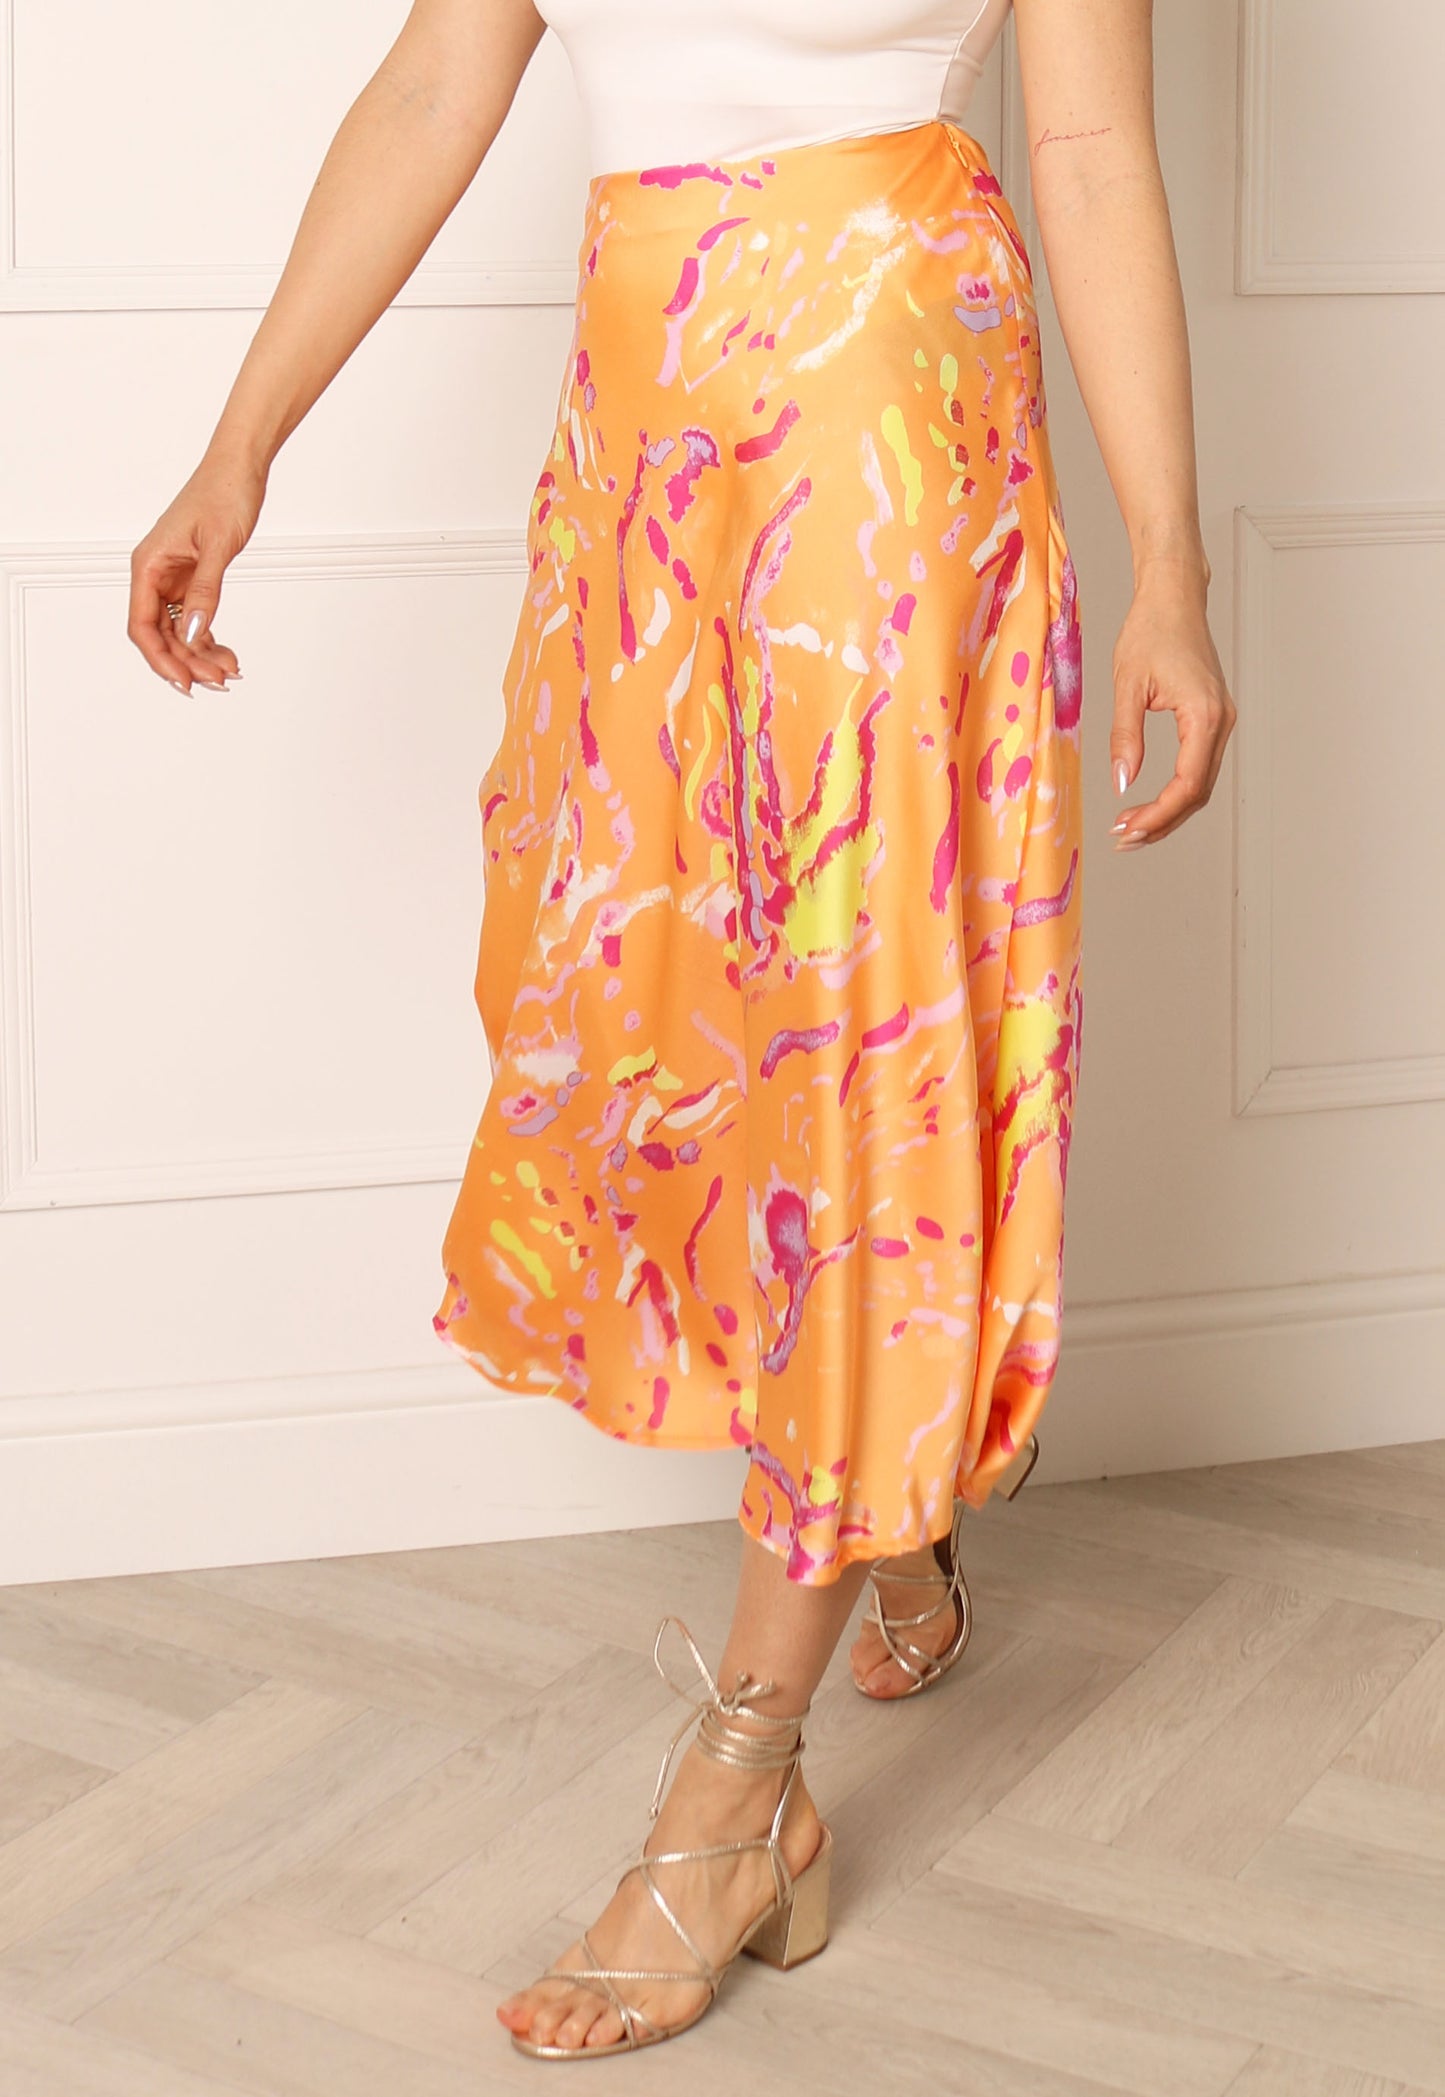 
                  
                    VERO MODA Heart Printed Bias Cut Satin Midi Slip Skirt in Orange & Pink Tones - One Nation Clothing
                  
                